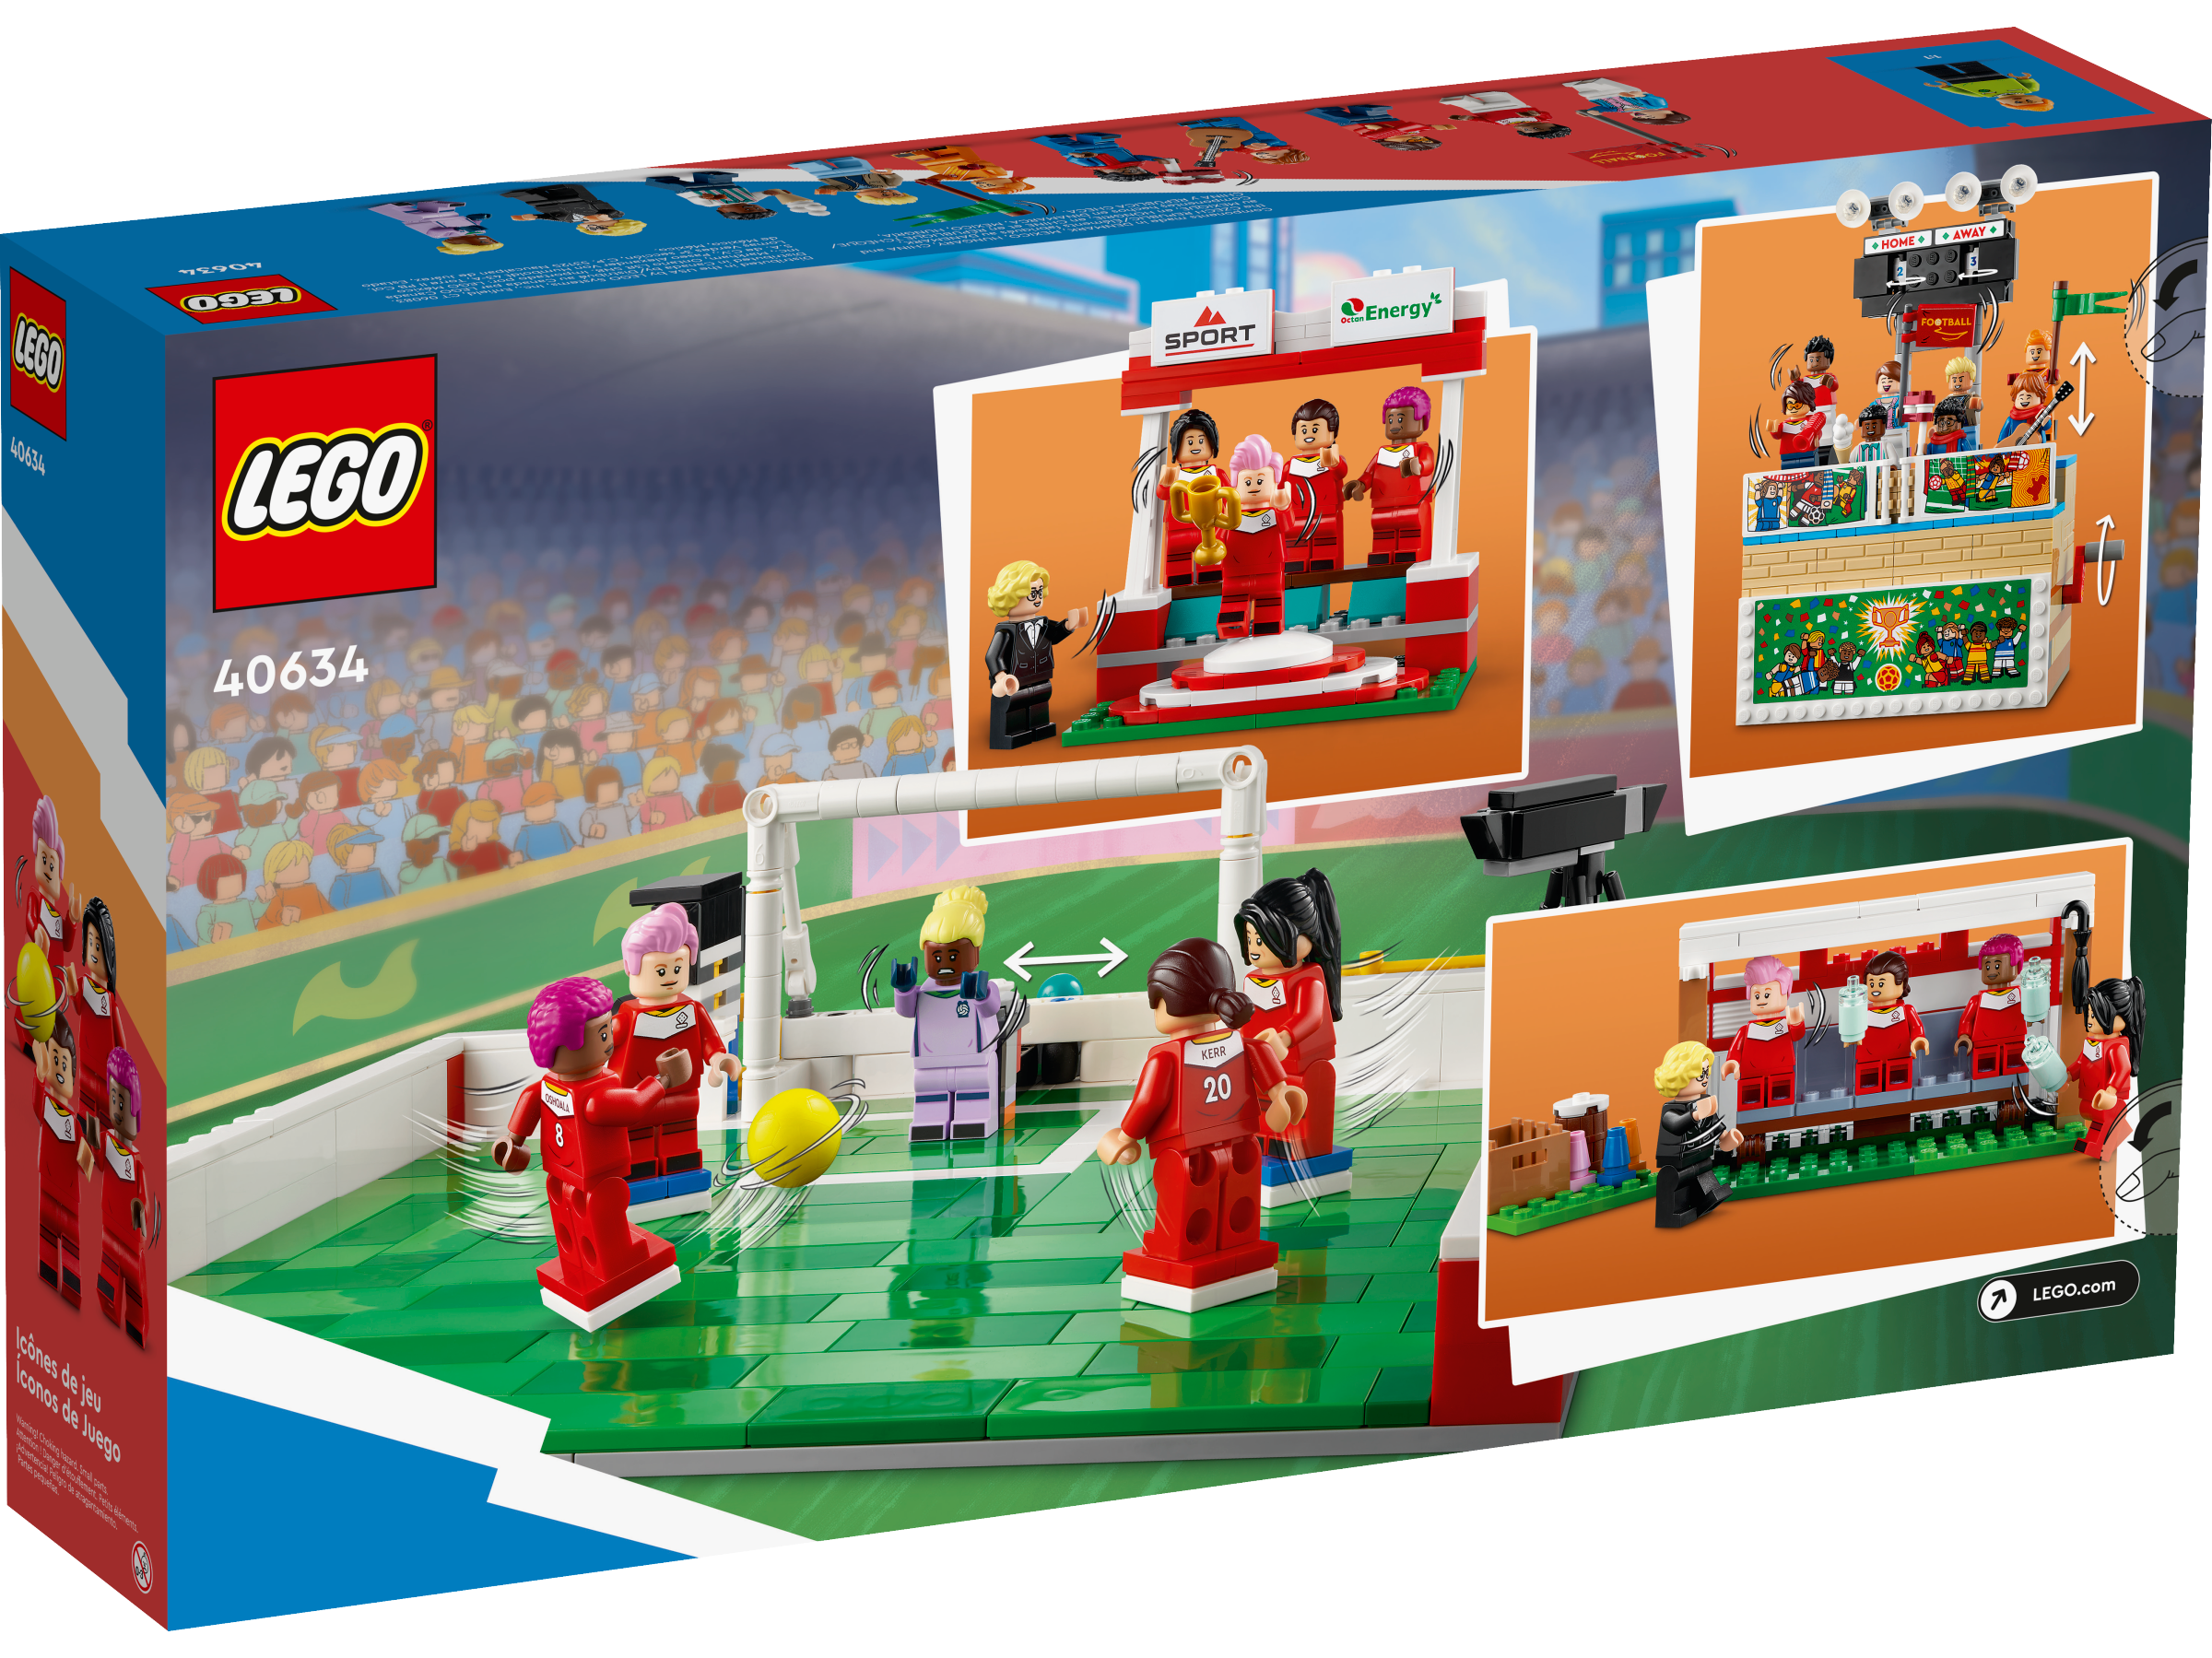 LEGO Football SOCCER #3421,3423, 3413 all brand new